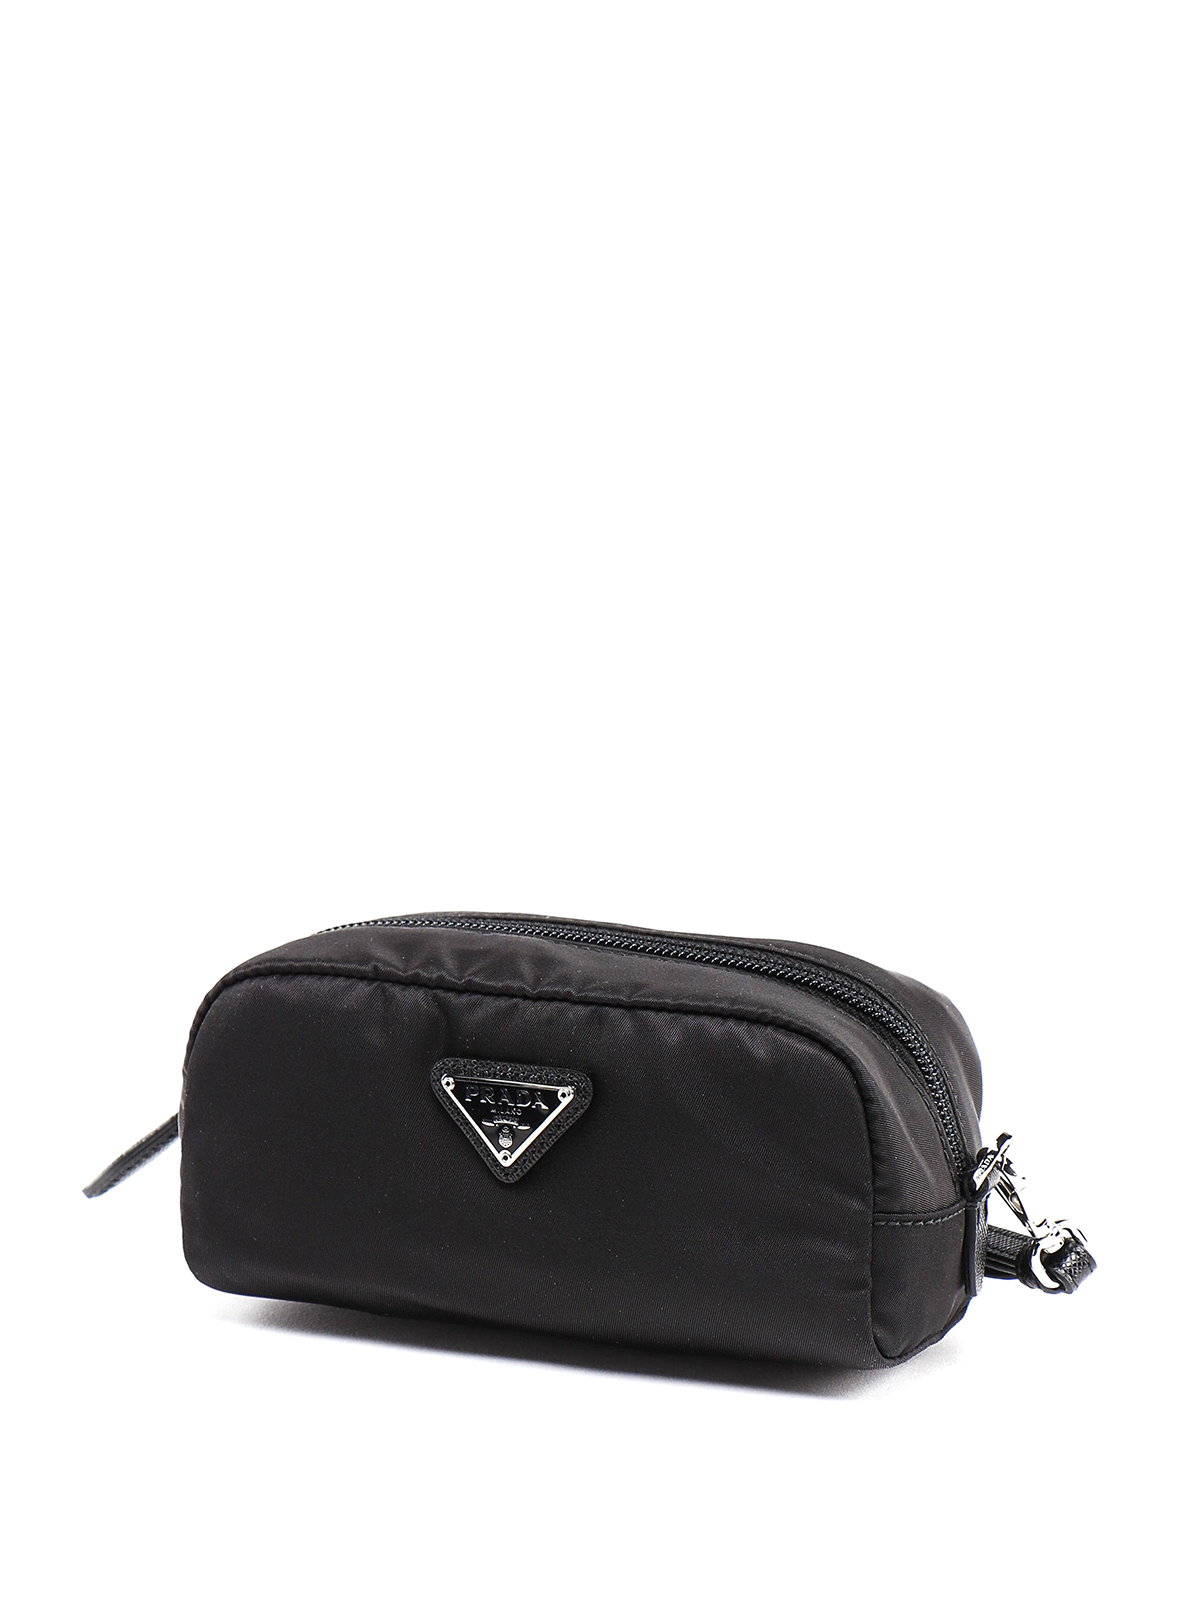 Prada Vela Nylon Beauty Bag Cosmetic Makeup Case - Black